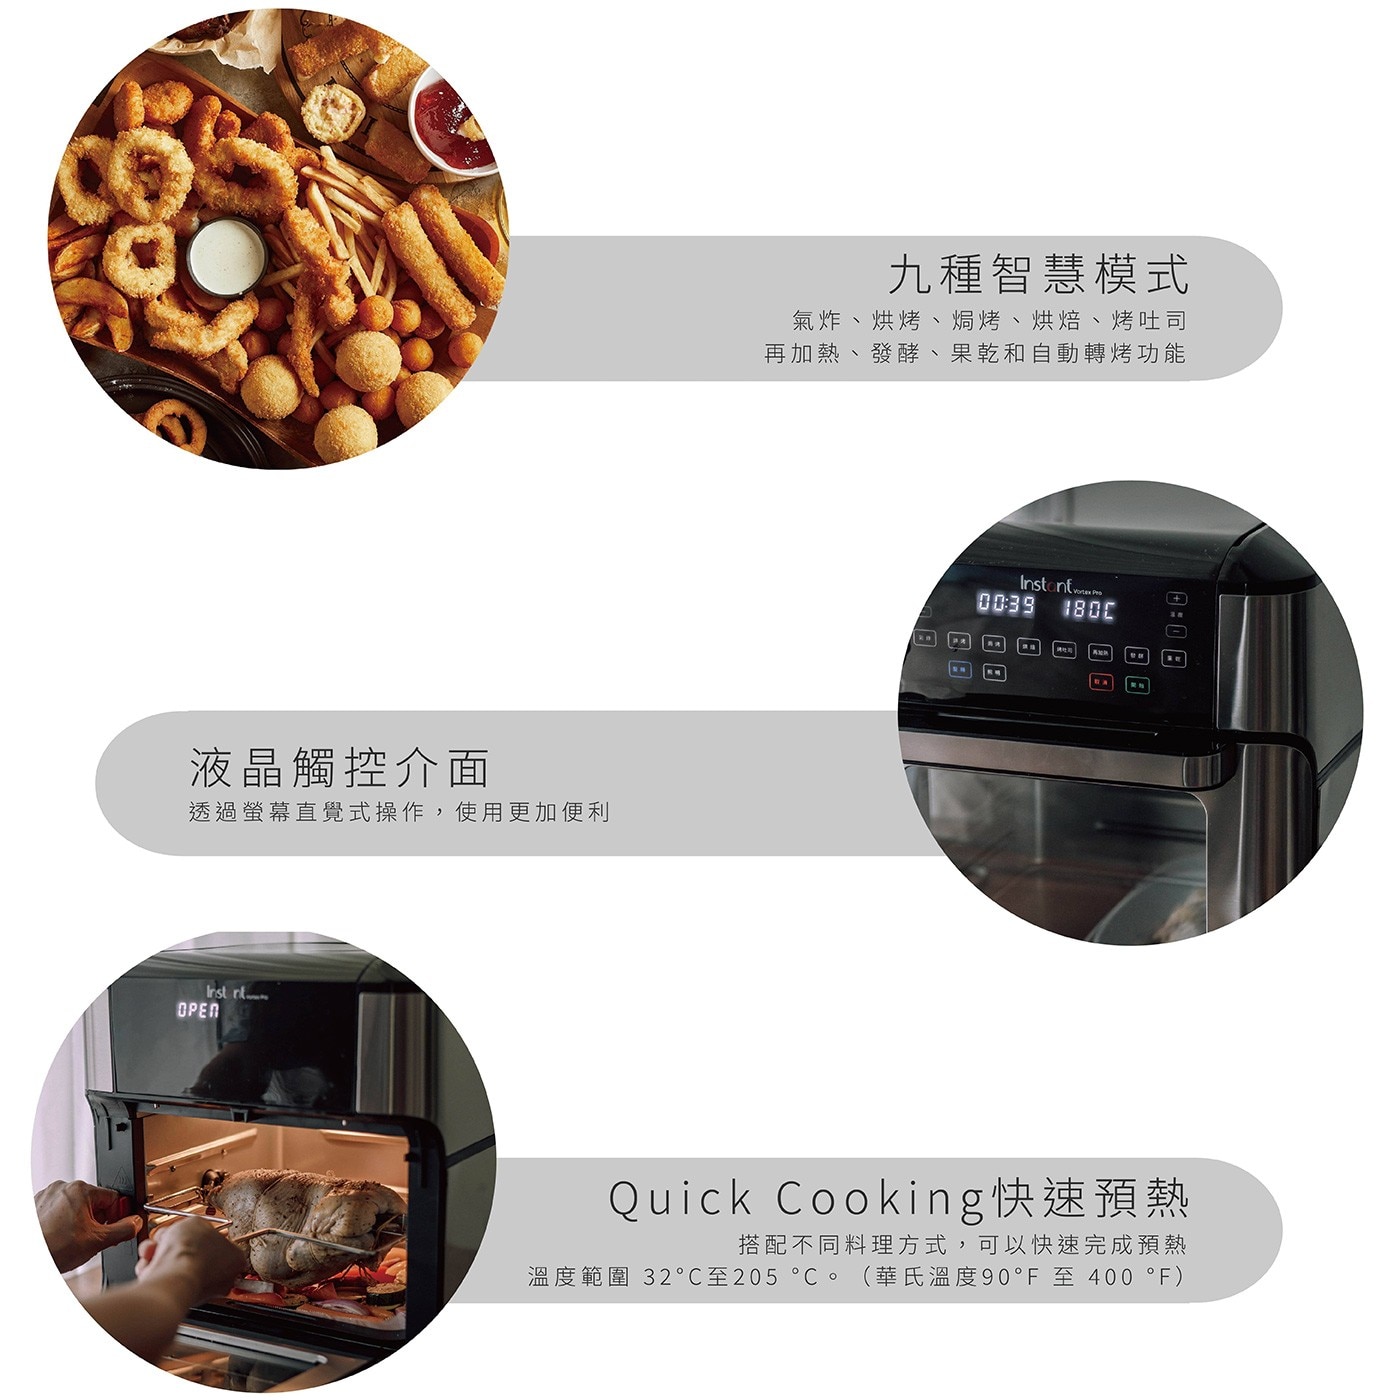 Instant Vortex Pro 9.5公升氣炸烤箱,九種智慧模式氣炸、烘烤、焗烤、烘焙、烤吐司、再加熱、發酵、果乾和自動轉烤功能.液晶觸控介面透過螢幕直覺式操作,使用更加便利.